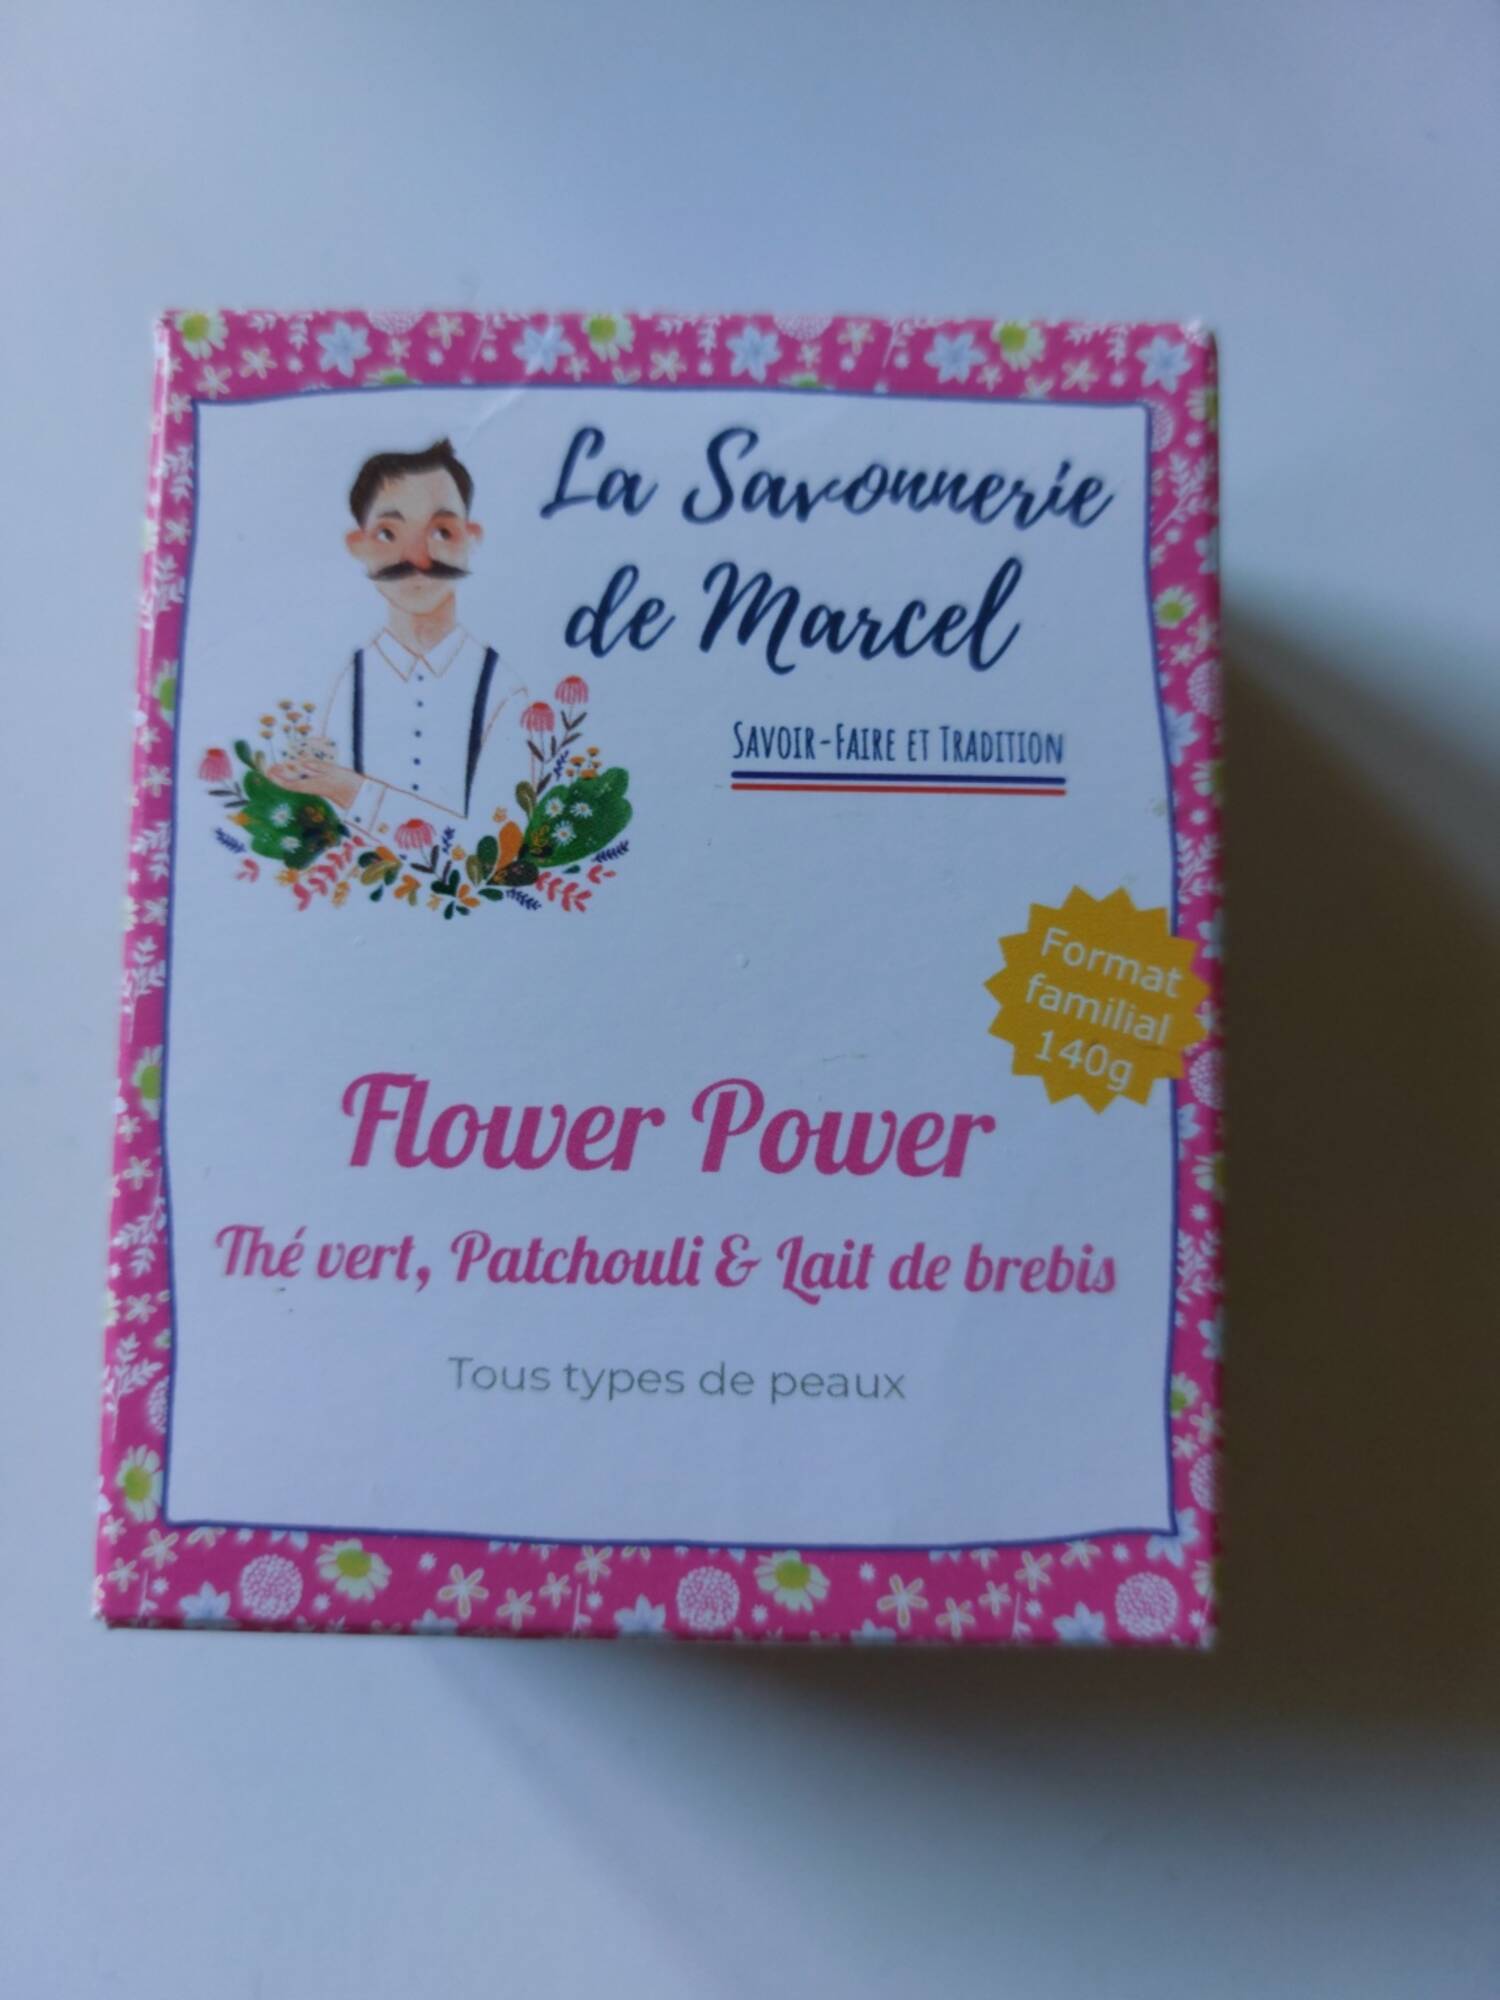 LA SAVONNERIE DE MARCEL - Flower Power